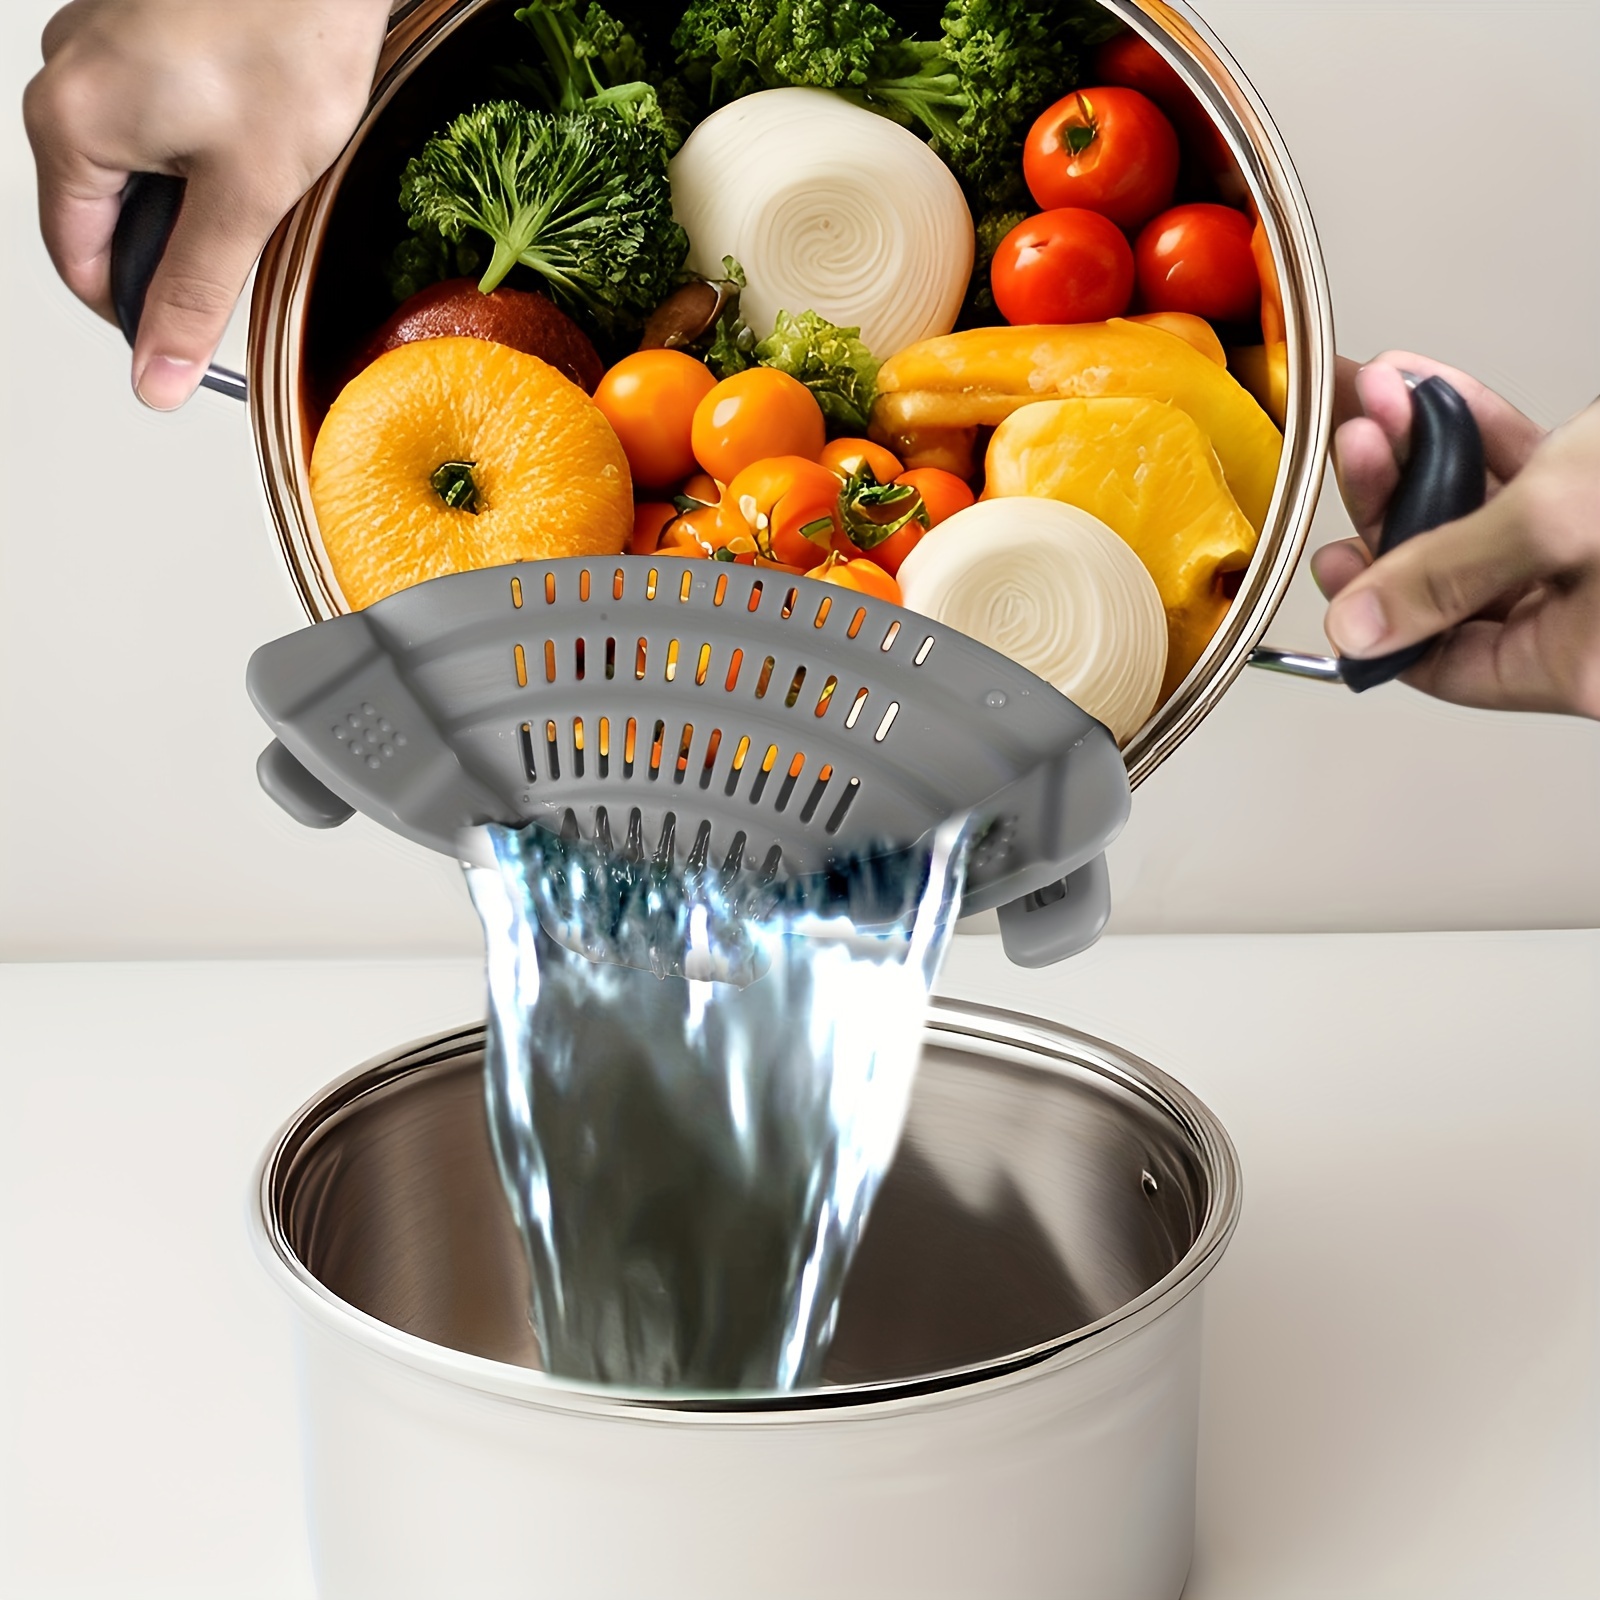 

Adjustable Clip-on Silicone Strainer Versatile Kitchen Colander For Pasta, Veggies, And Fruits - Easy-clean, Space-saving Kitchen Gadget